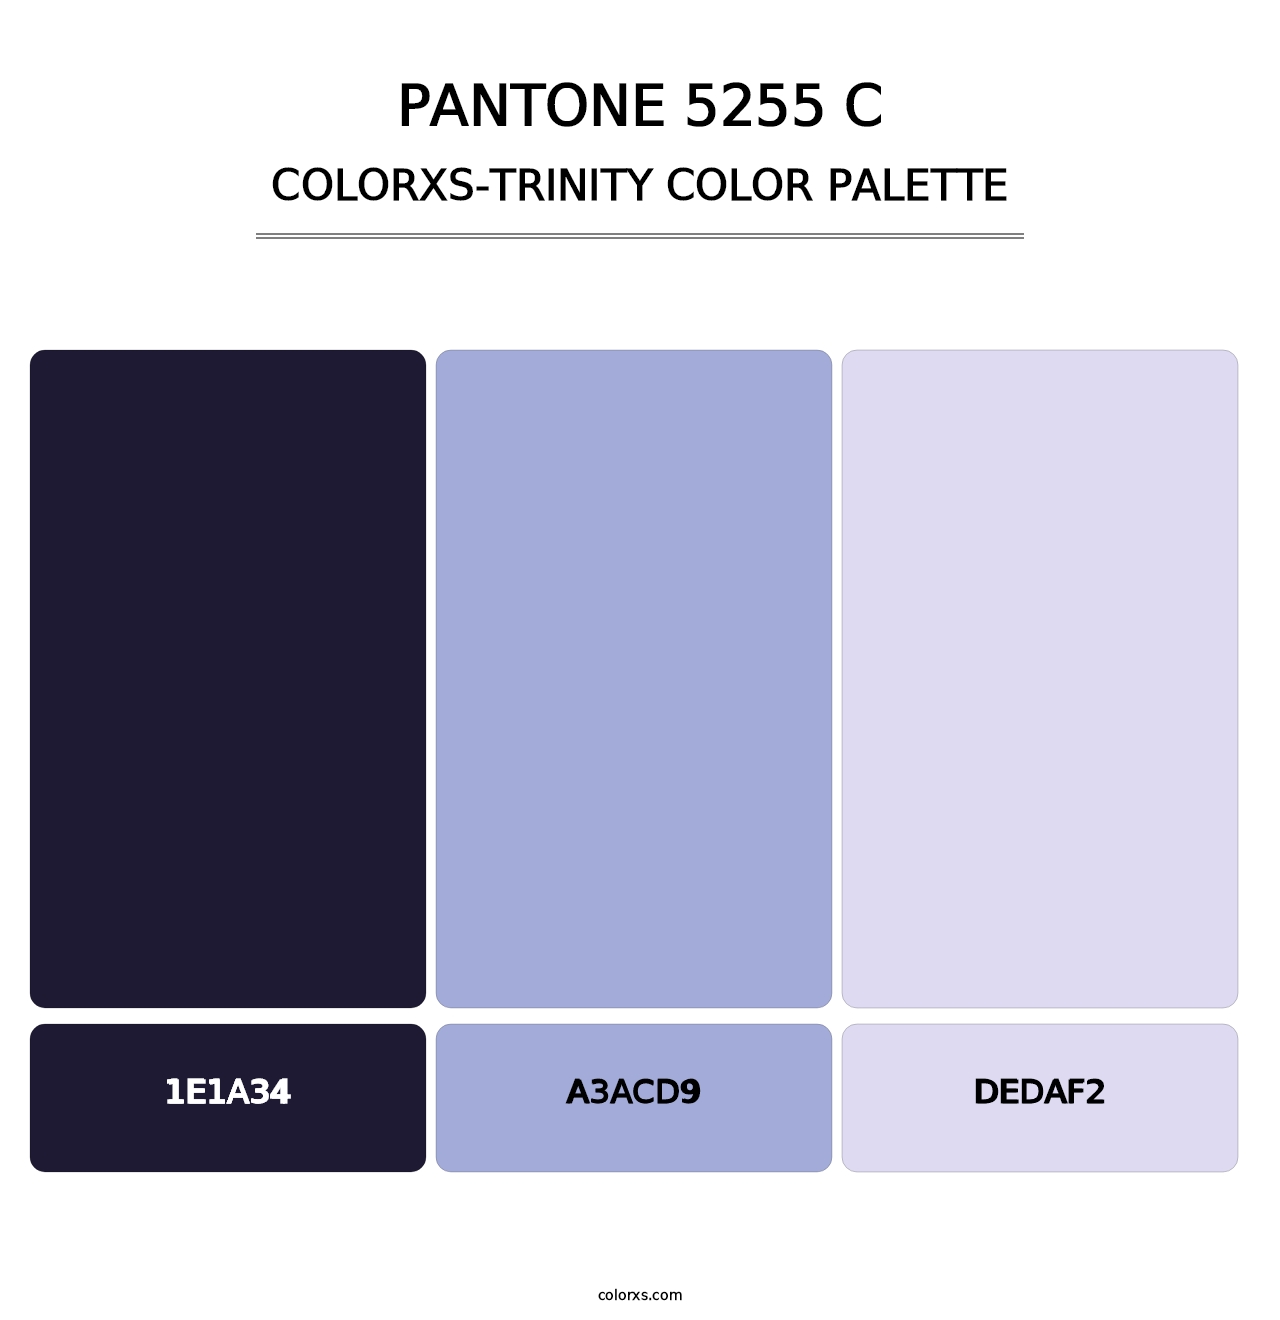 PANTONE 5255 C - Colorxs Trinity Palette